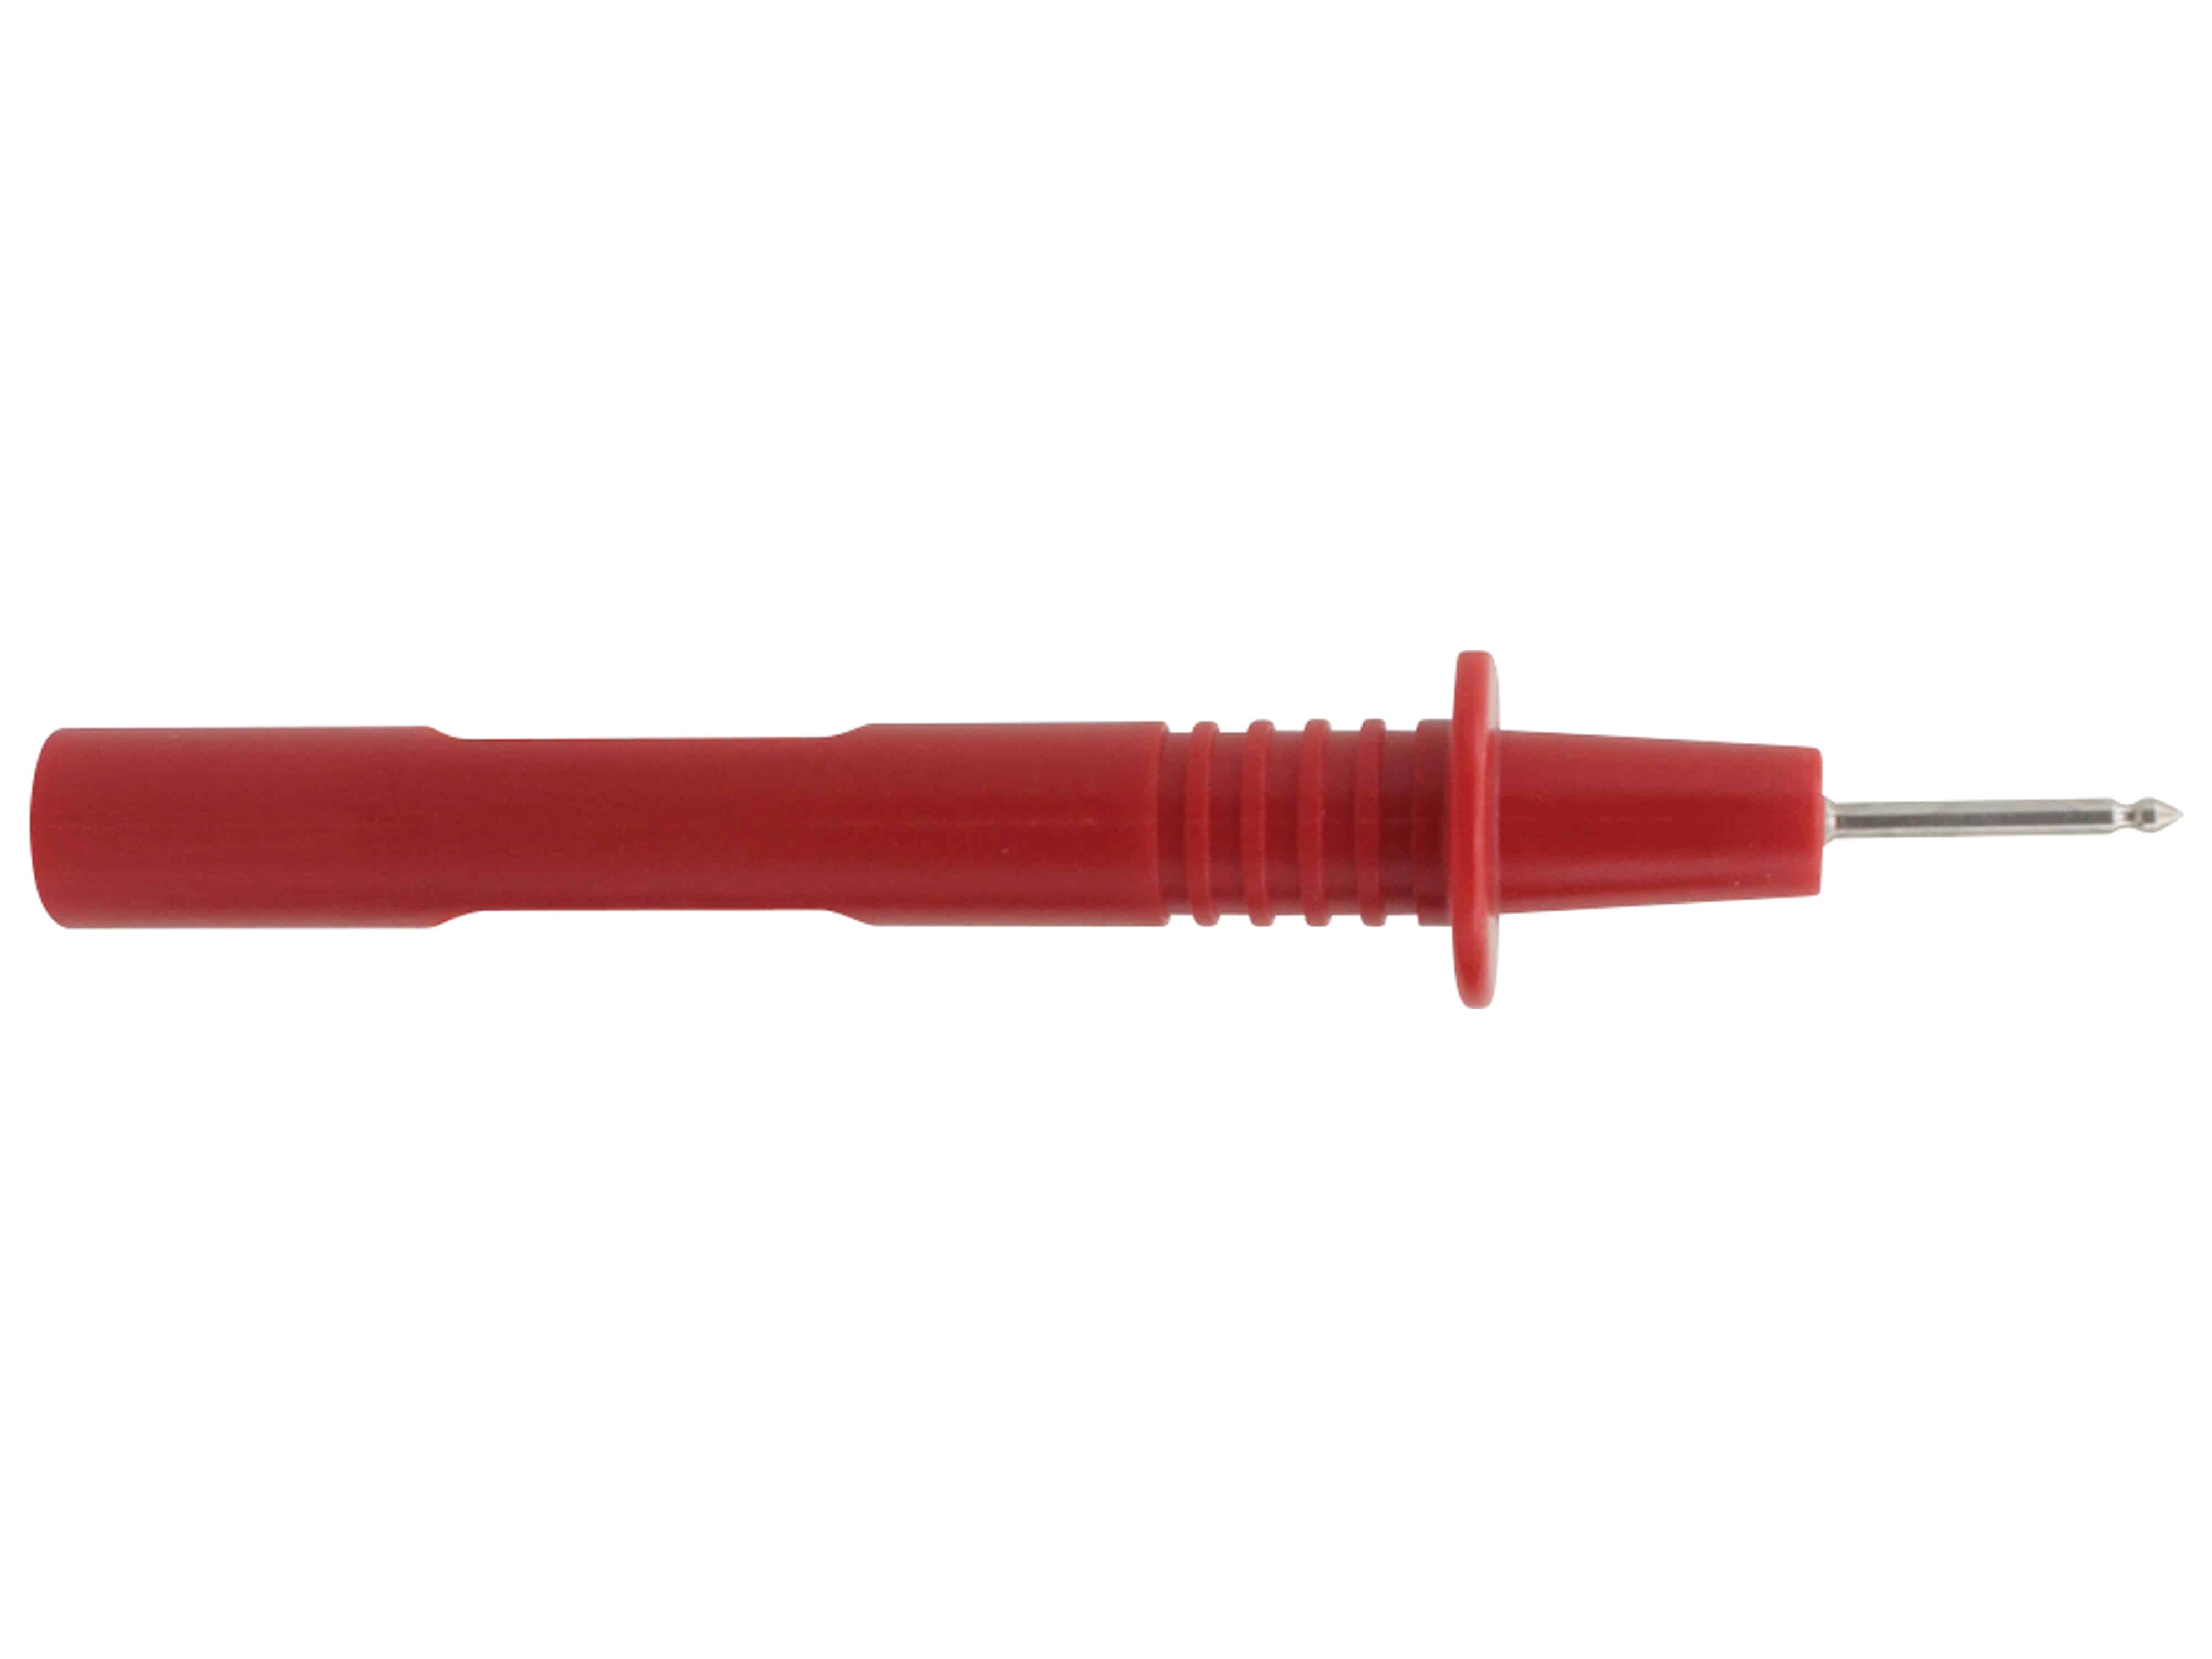 DONAU ELEKTRONIK Stift Testspitze, 2mm, rot, 4020